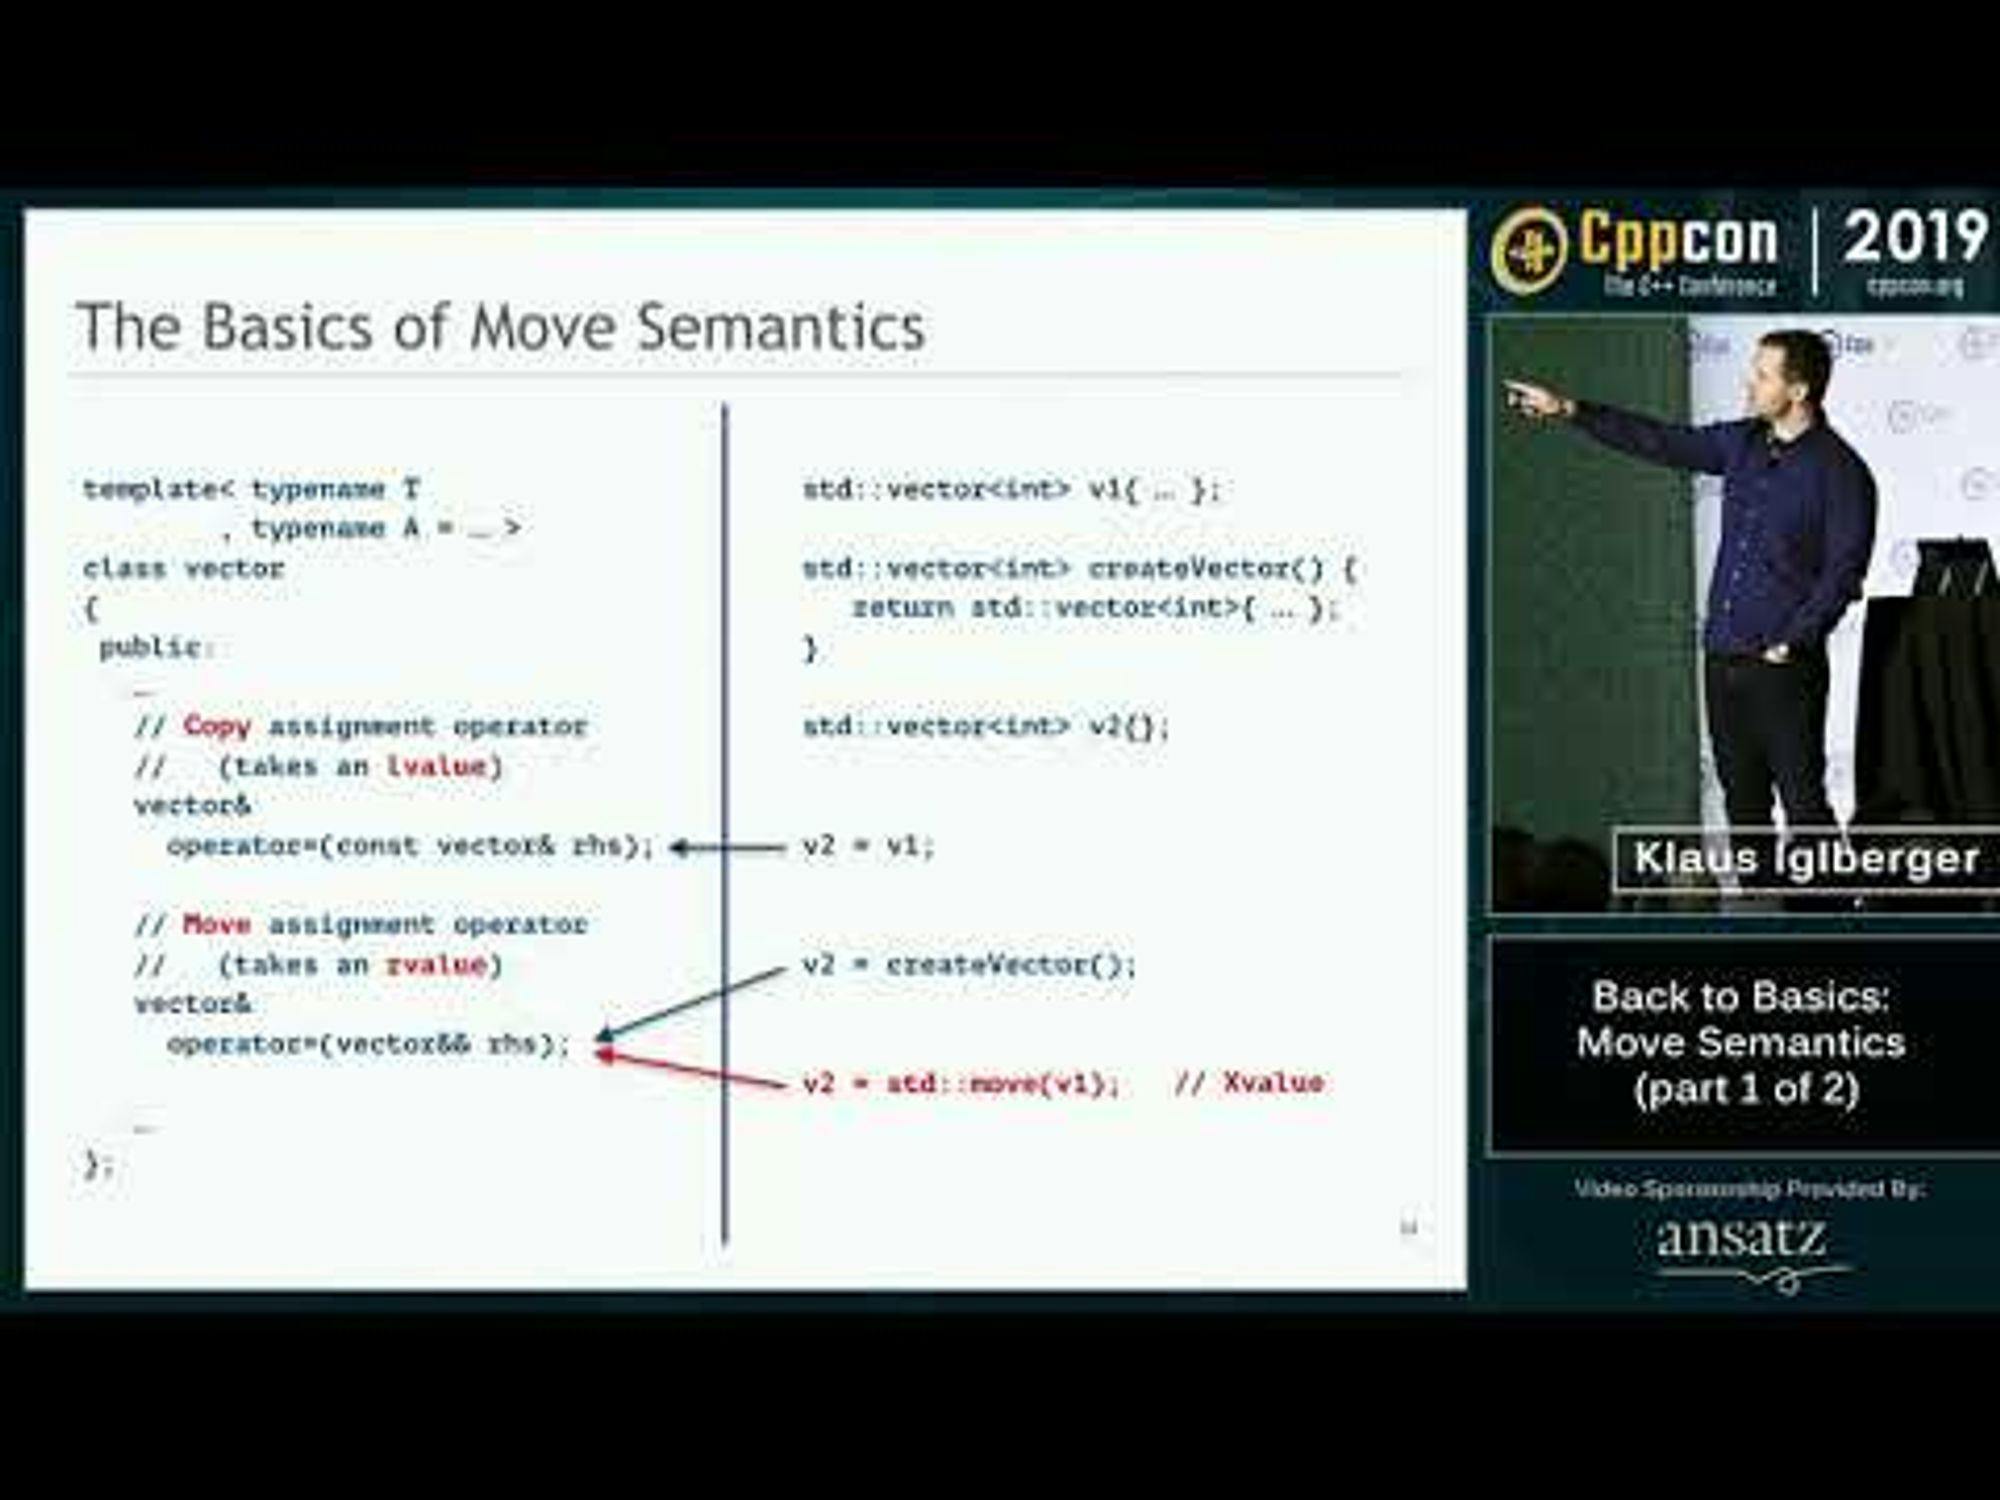 Back to Basics: Move Semantics Part 1